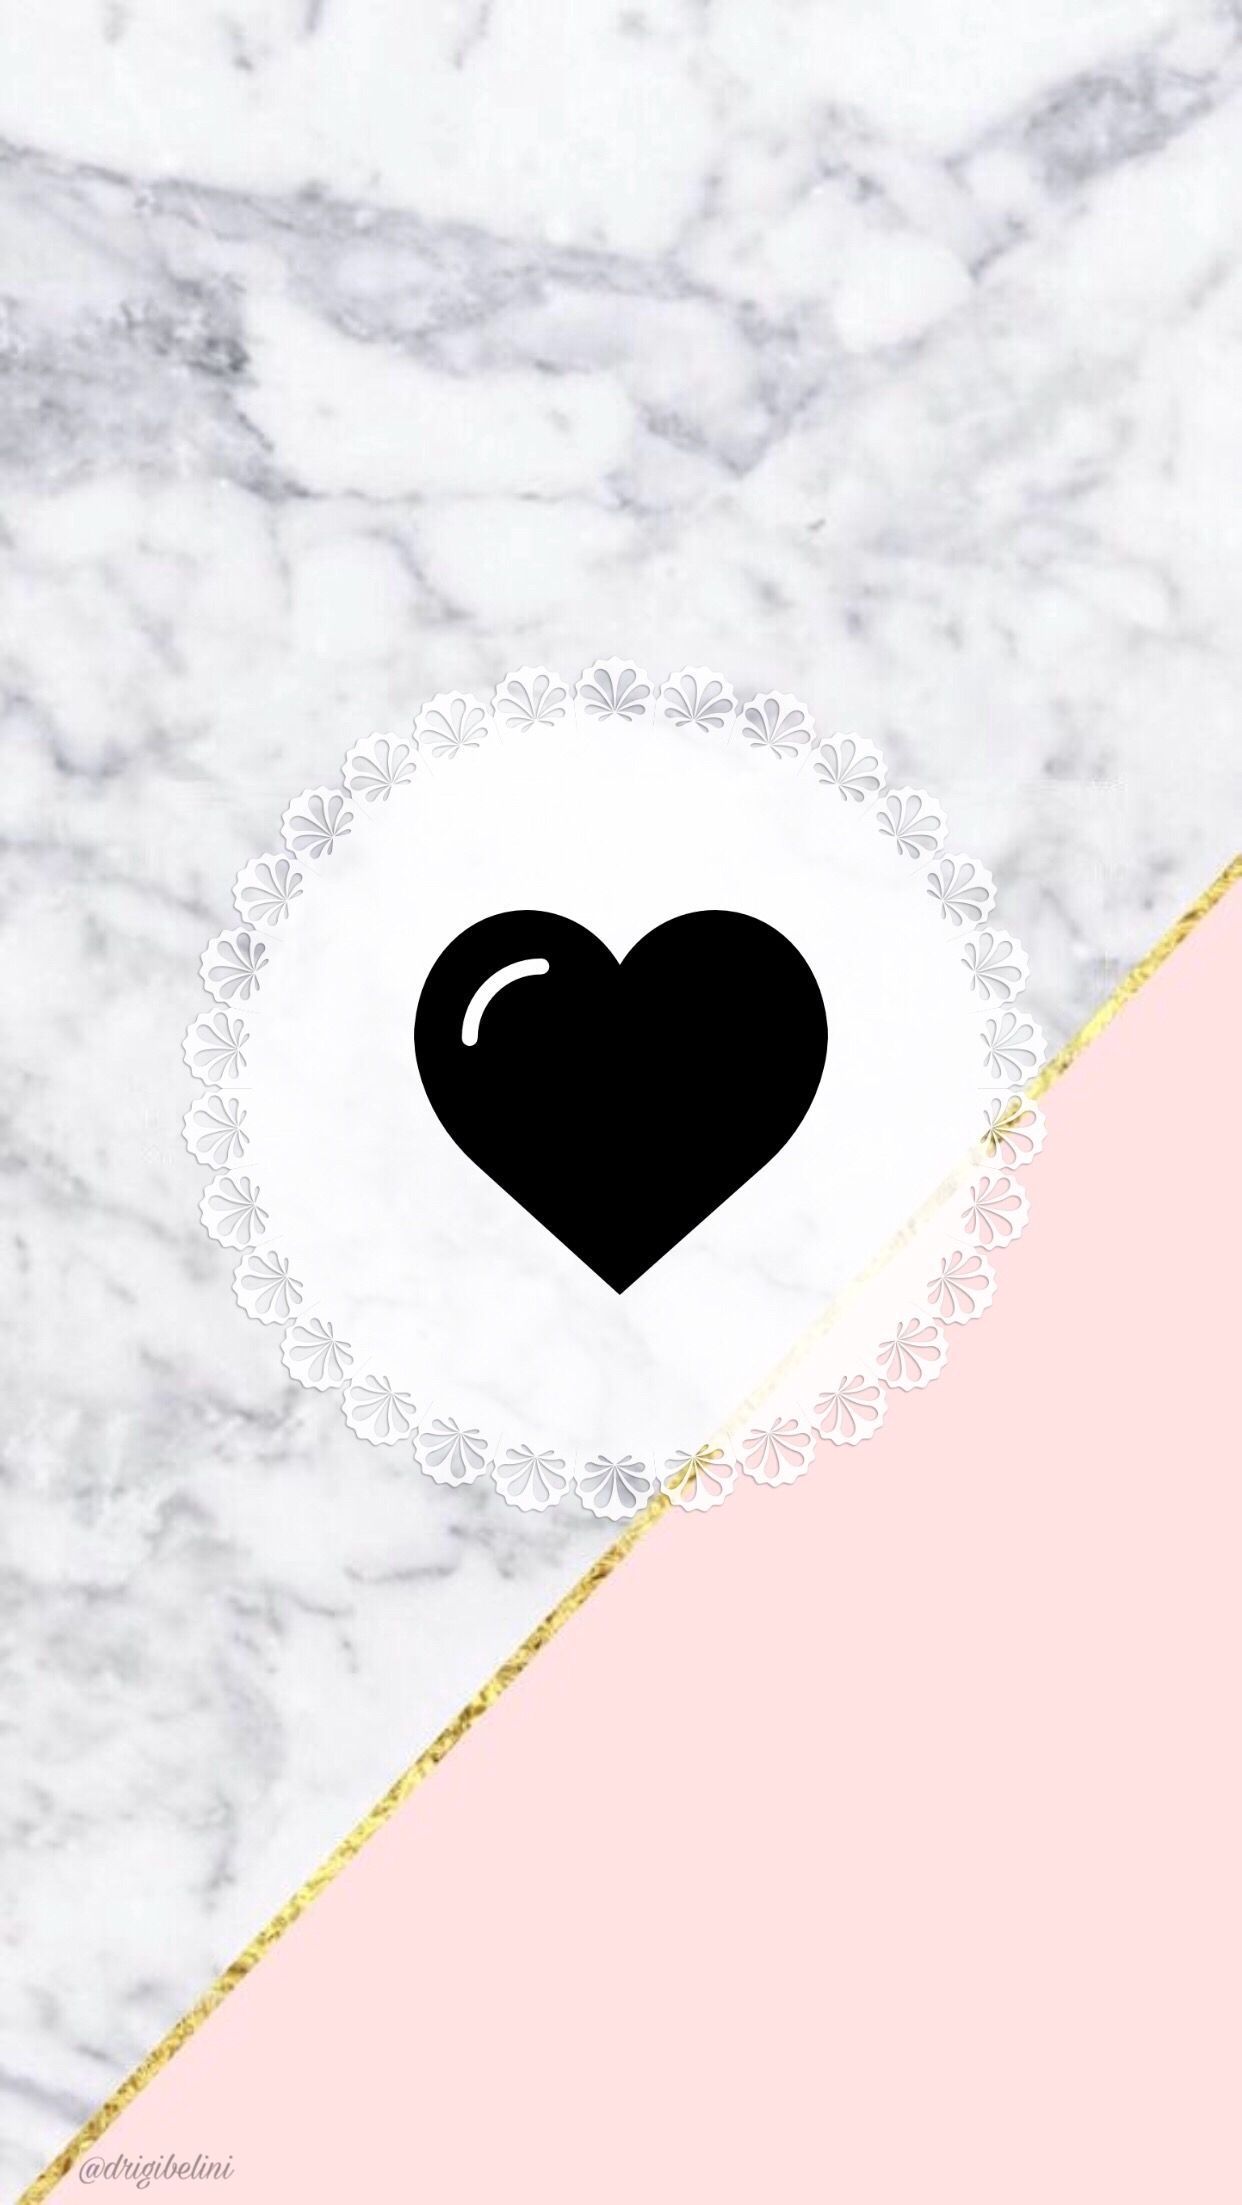 The Best Wallpapper: Love Wallpaper For Instagram Highlights